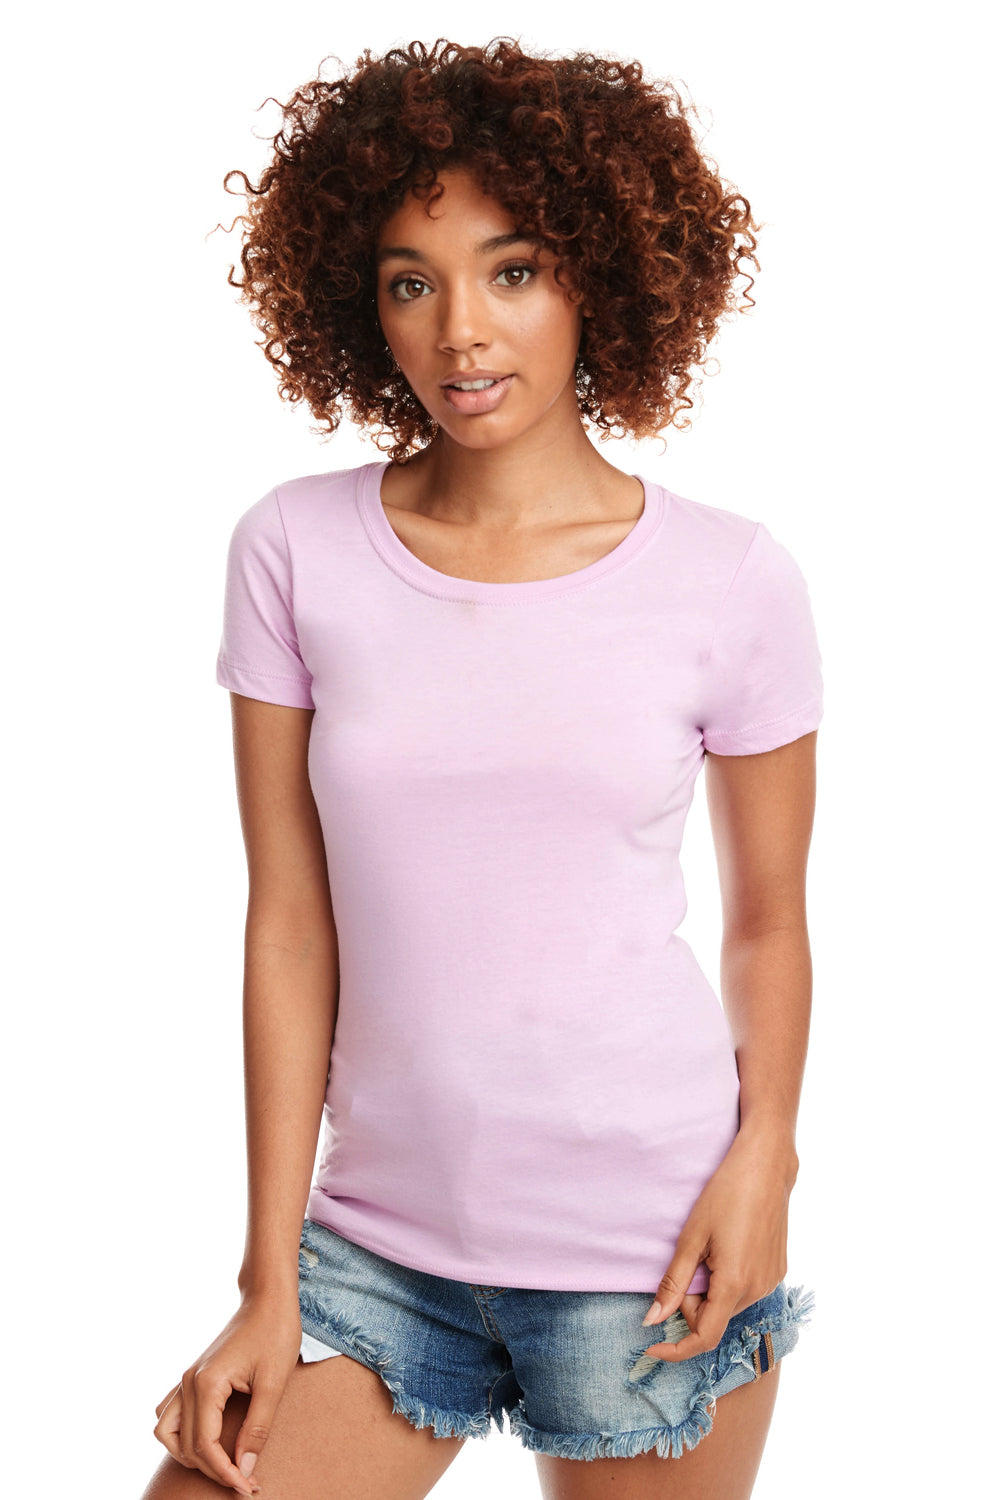 Next Level N1510 Womens Ideal Jersey Short Sleeve Crewneck T-Shirt Lilac Pink Front